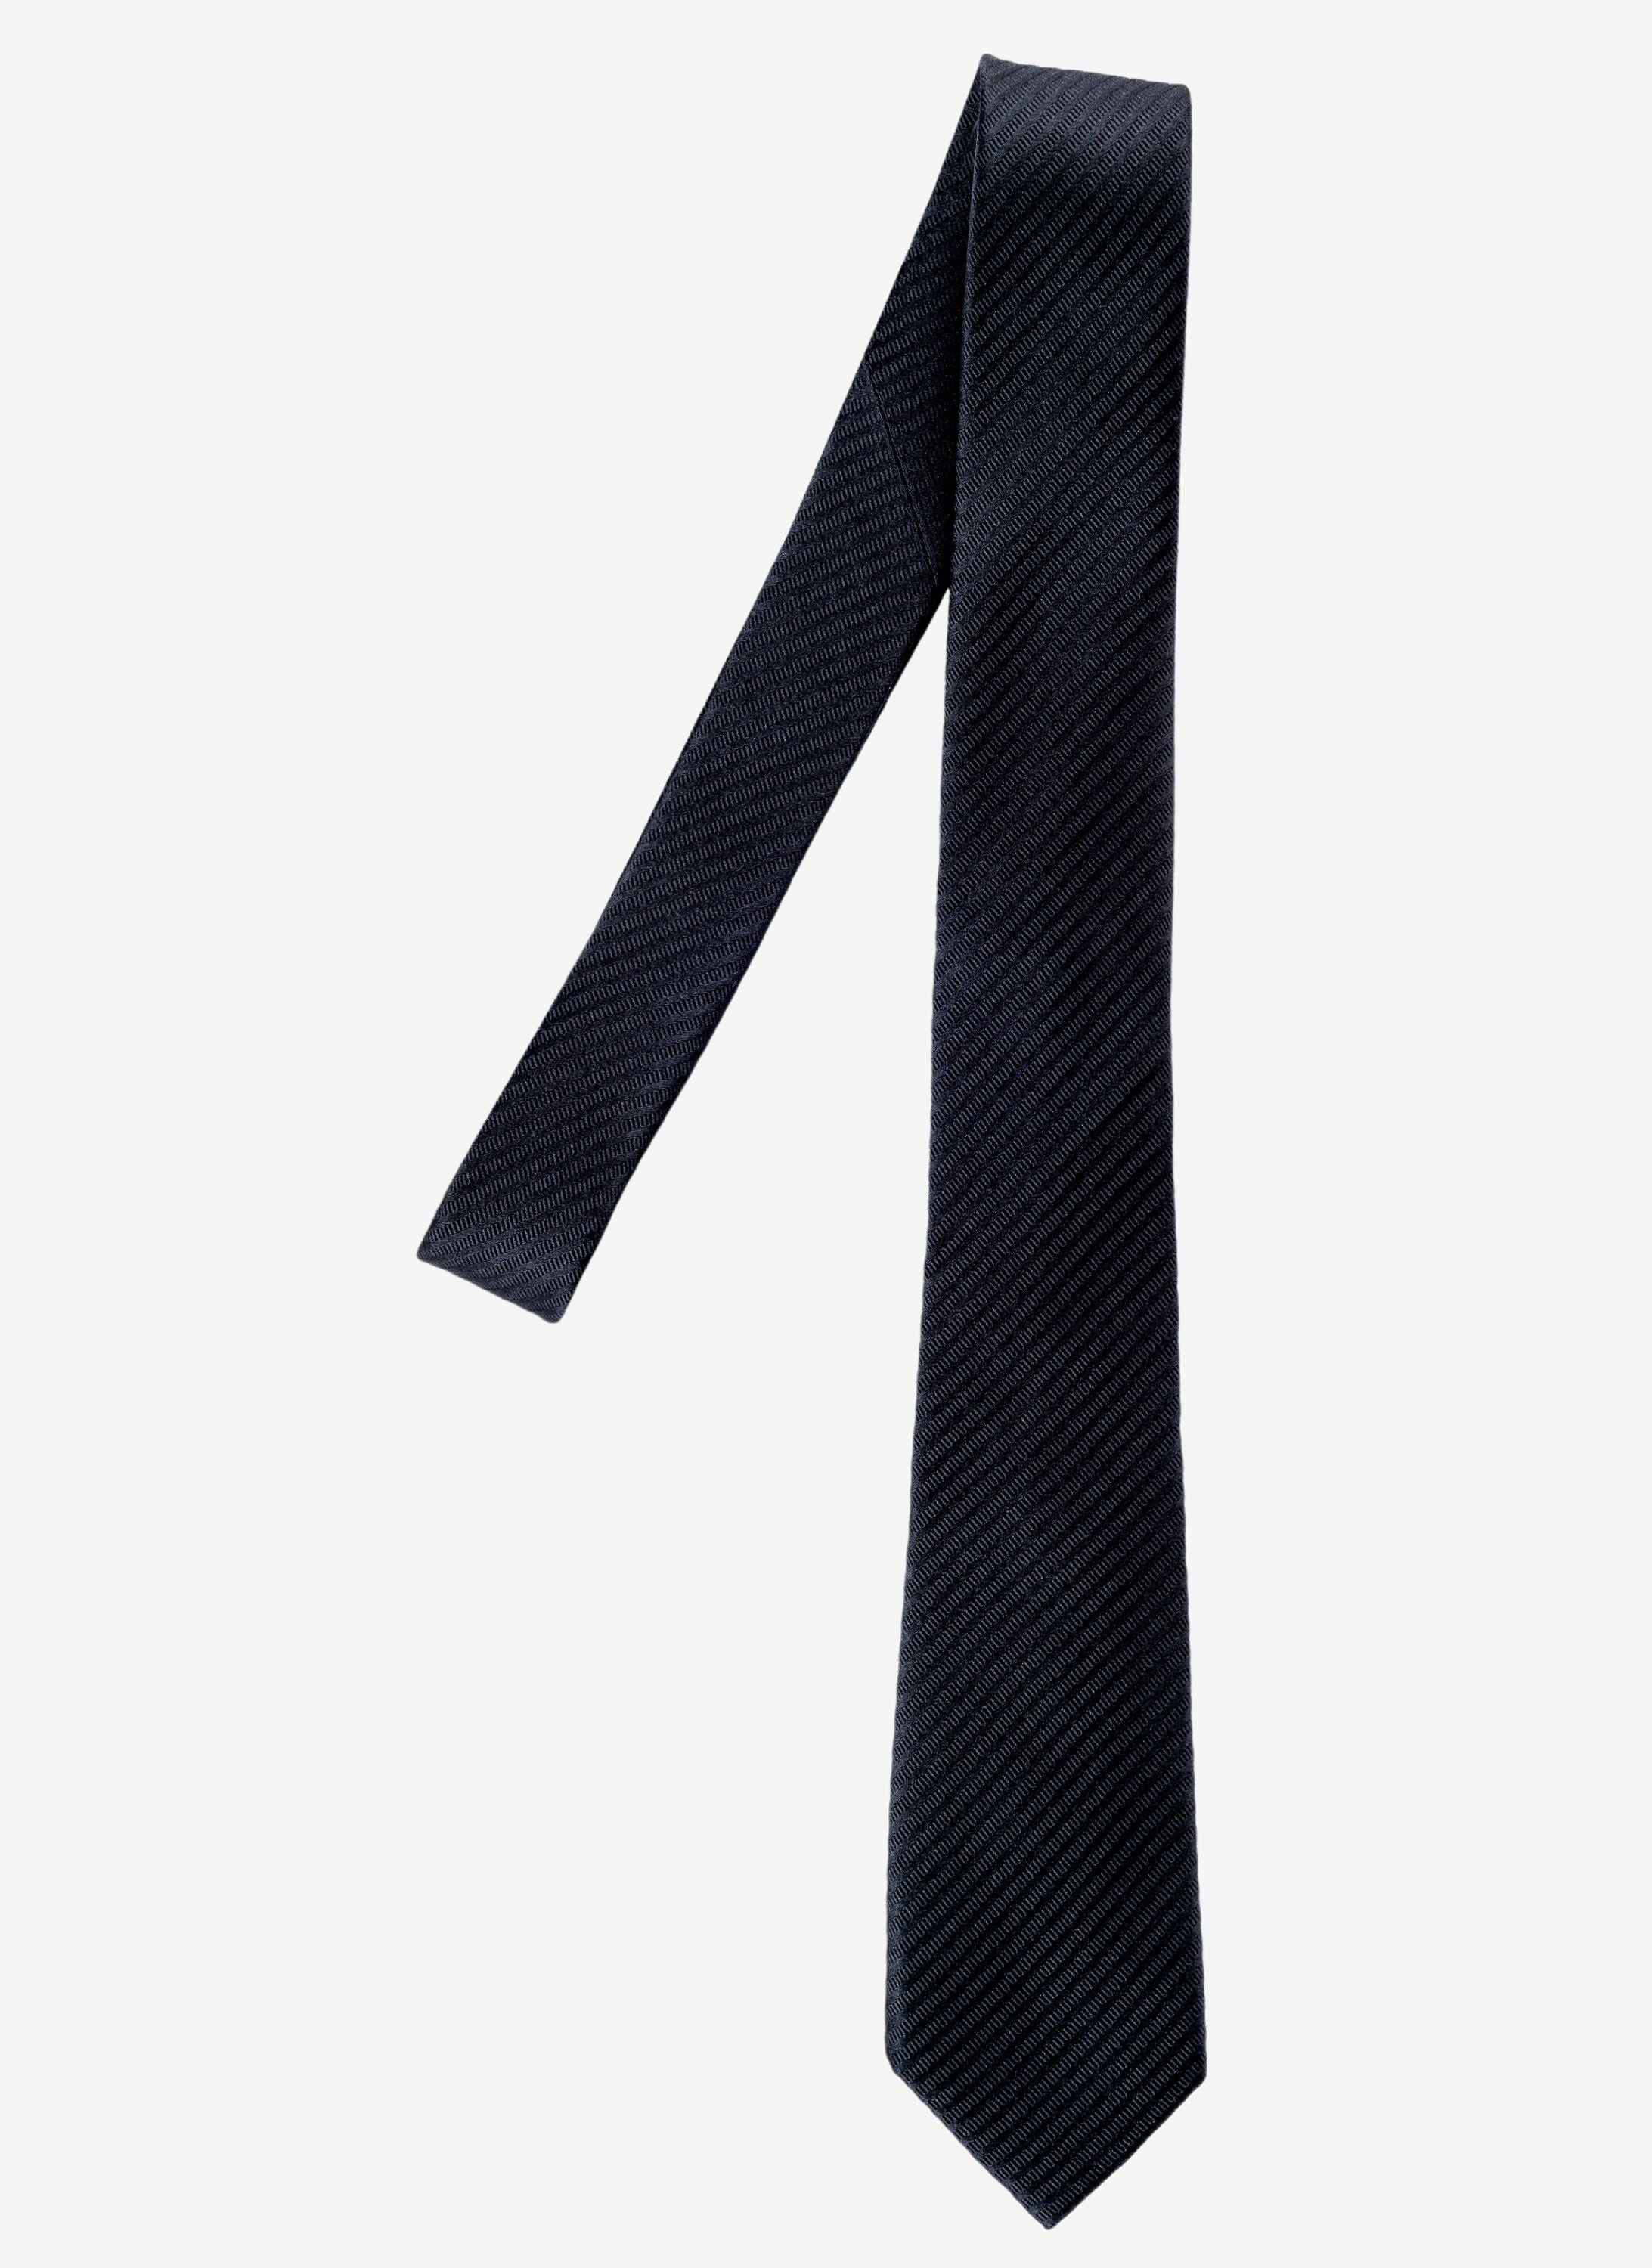 Elegante Krawatte in schwarz.